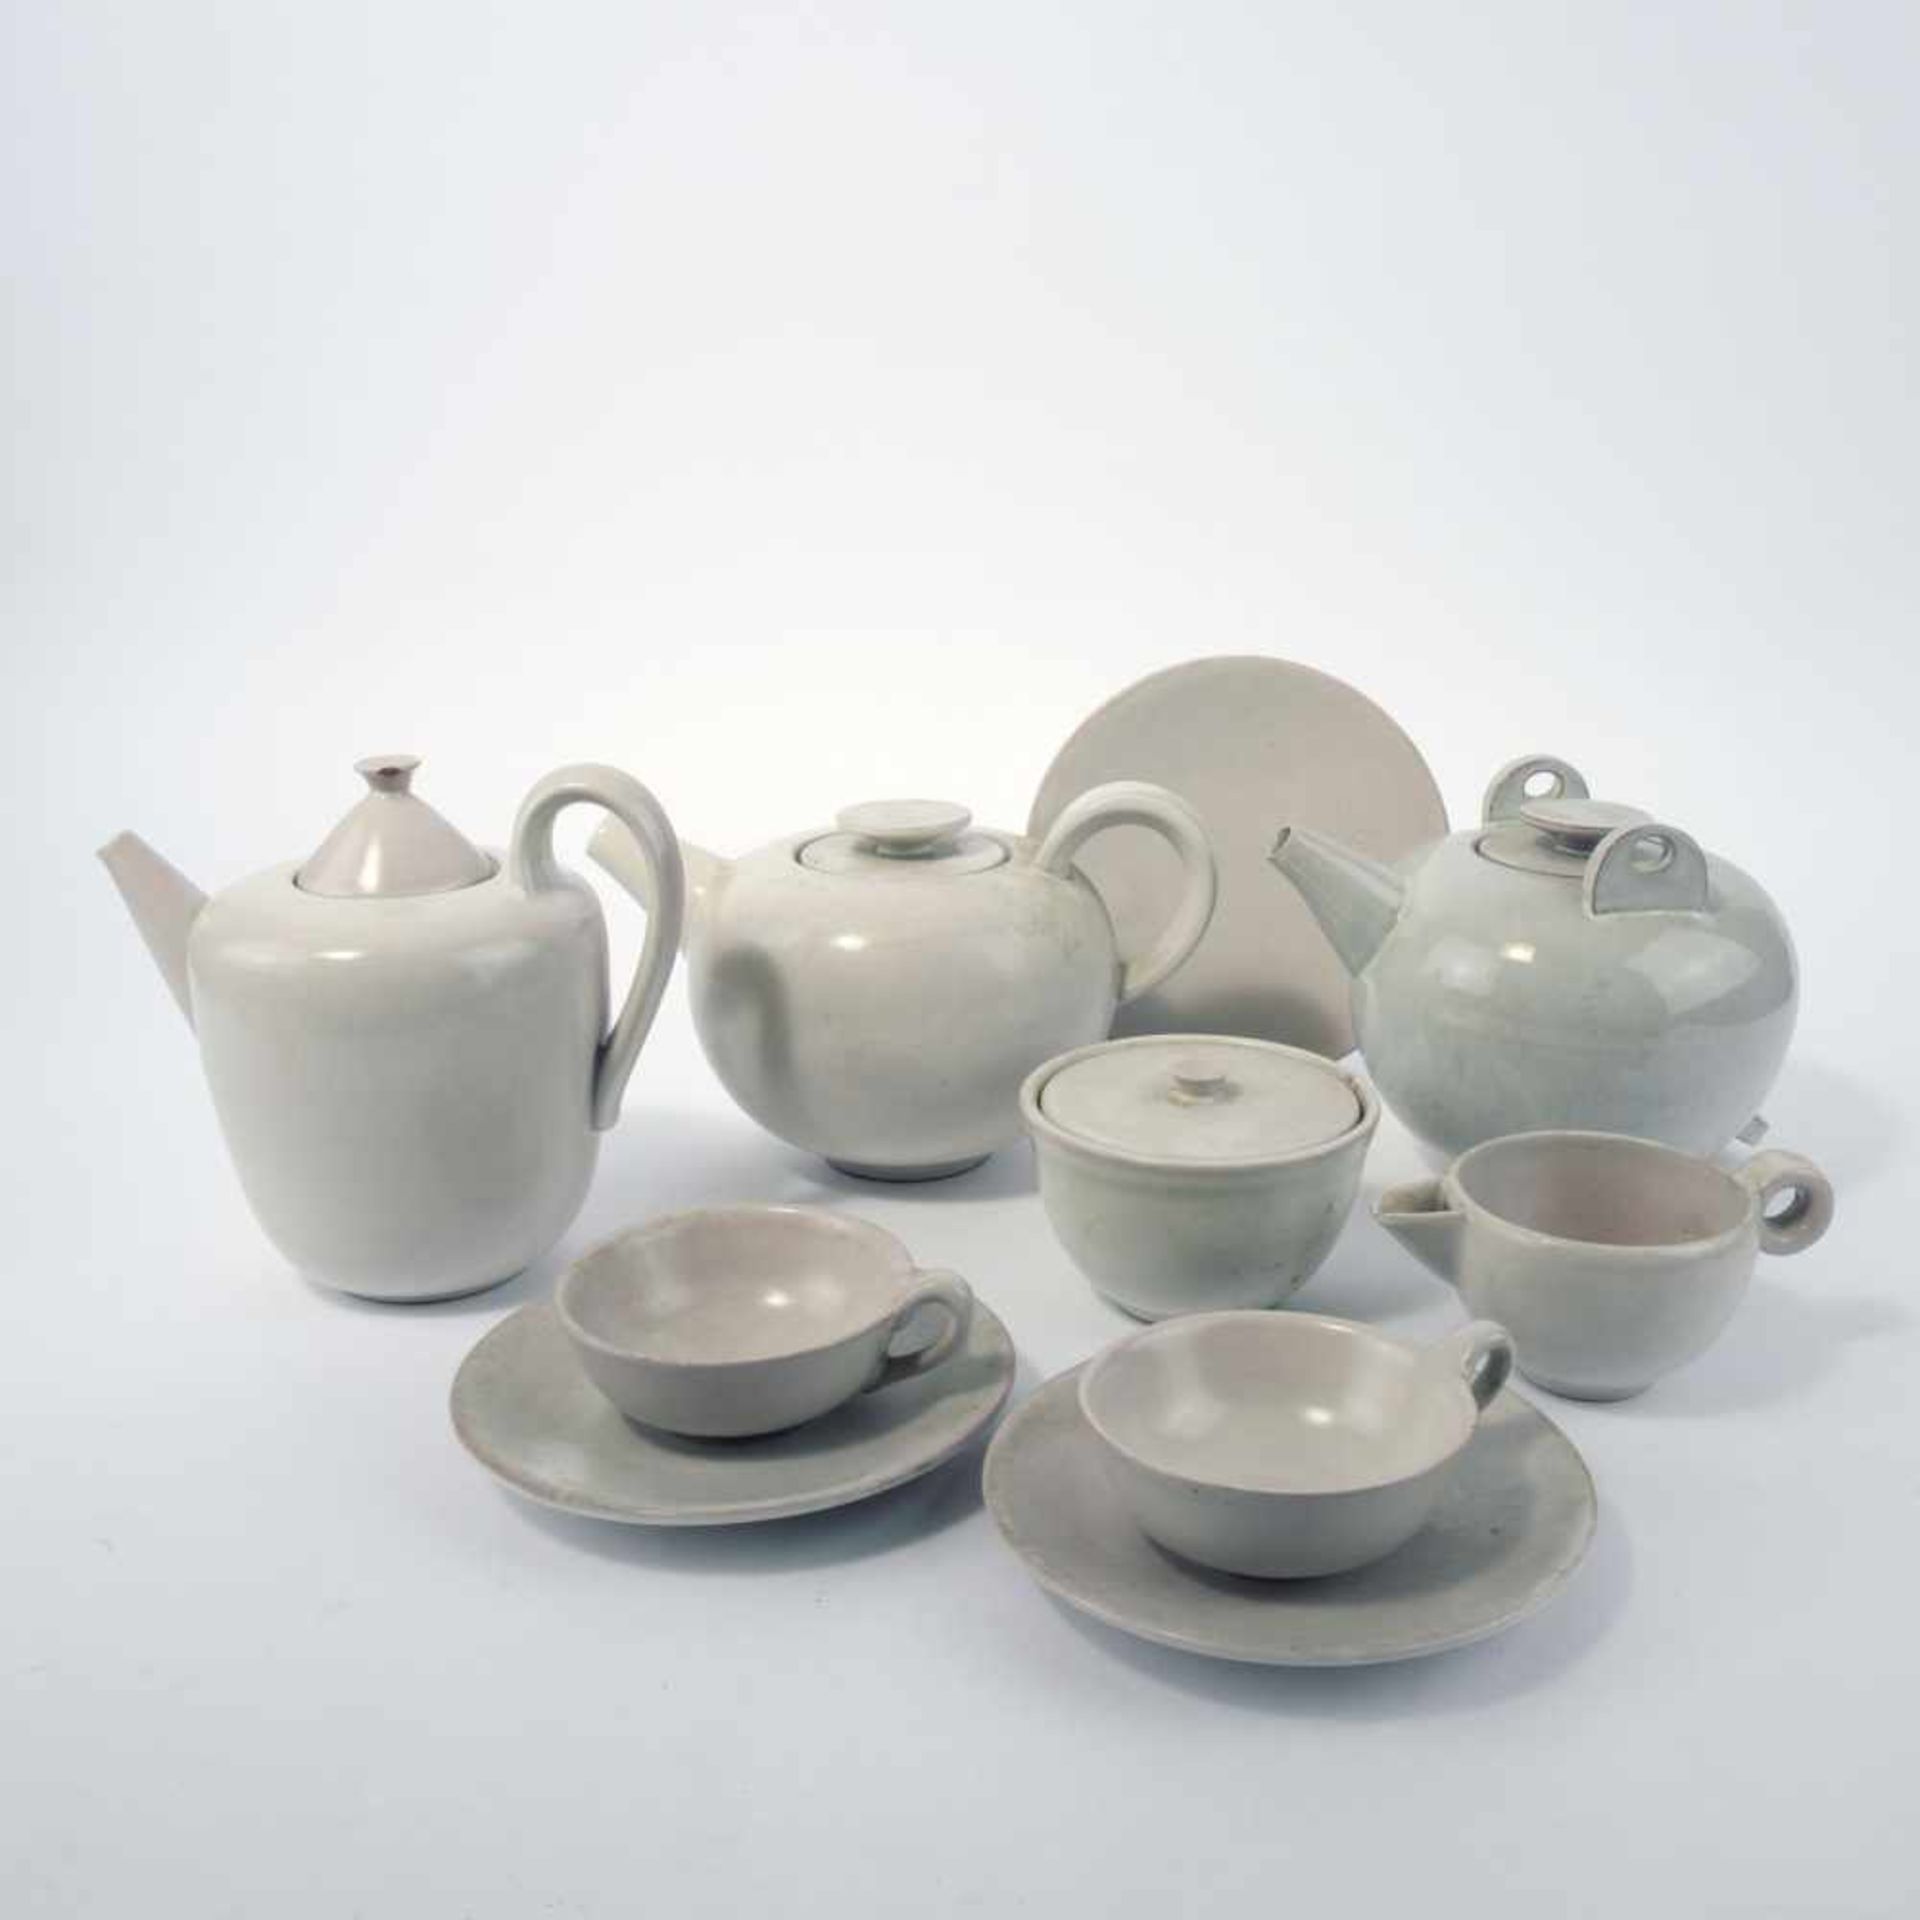 Otto Lindig Teeservice, 1920-25 16 Teile. Teekanne mit Henkelvorrichtung: H. 16,3 cm; Teekanne: H.